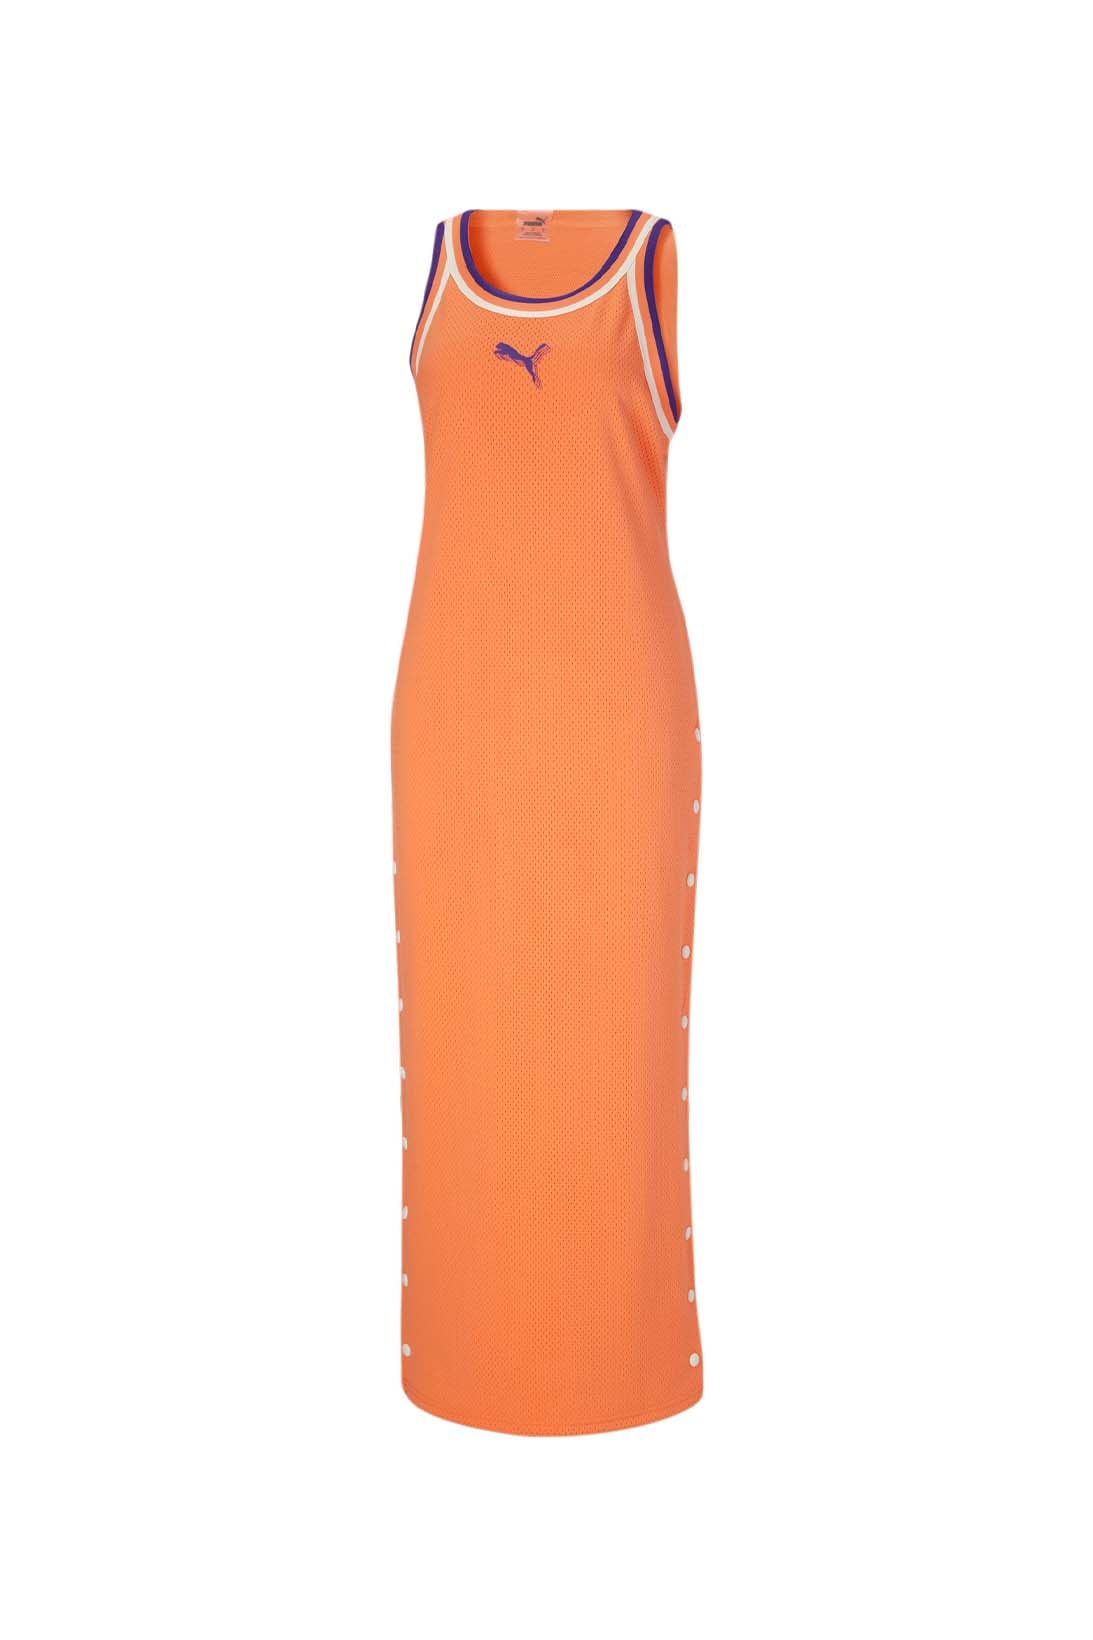 Skylar Diggins-Smith PUMA Desert Sky TRC Blaze Court Sky Sneaker Jersey Dress Price Release Info